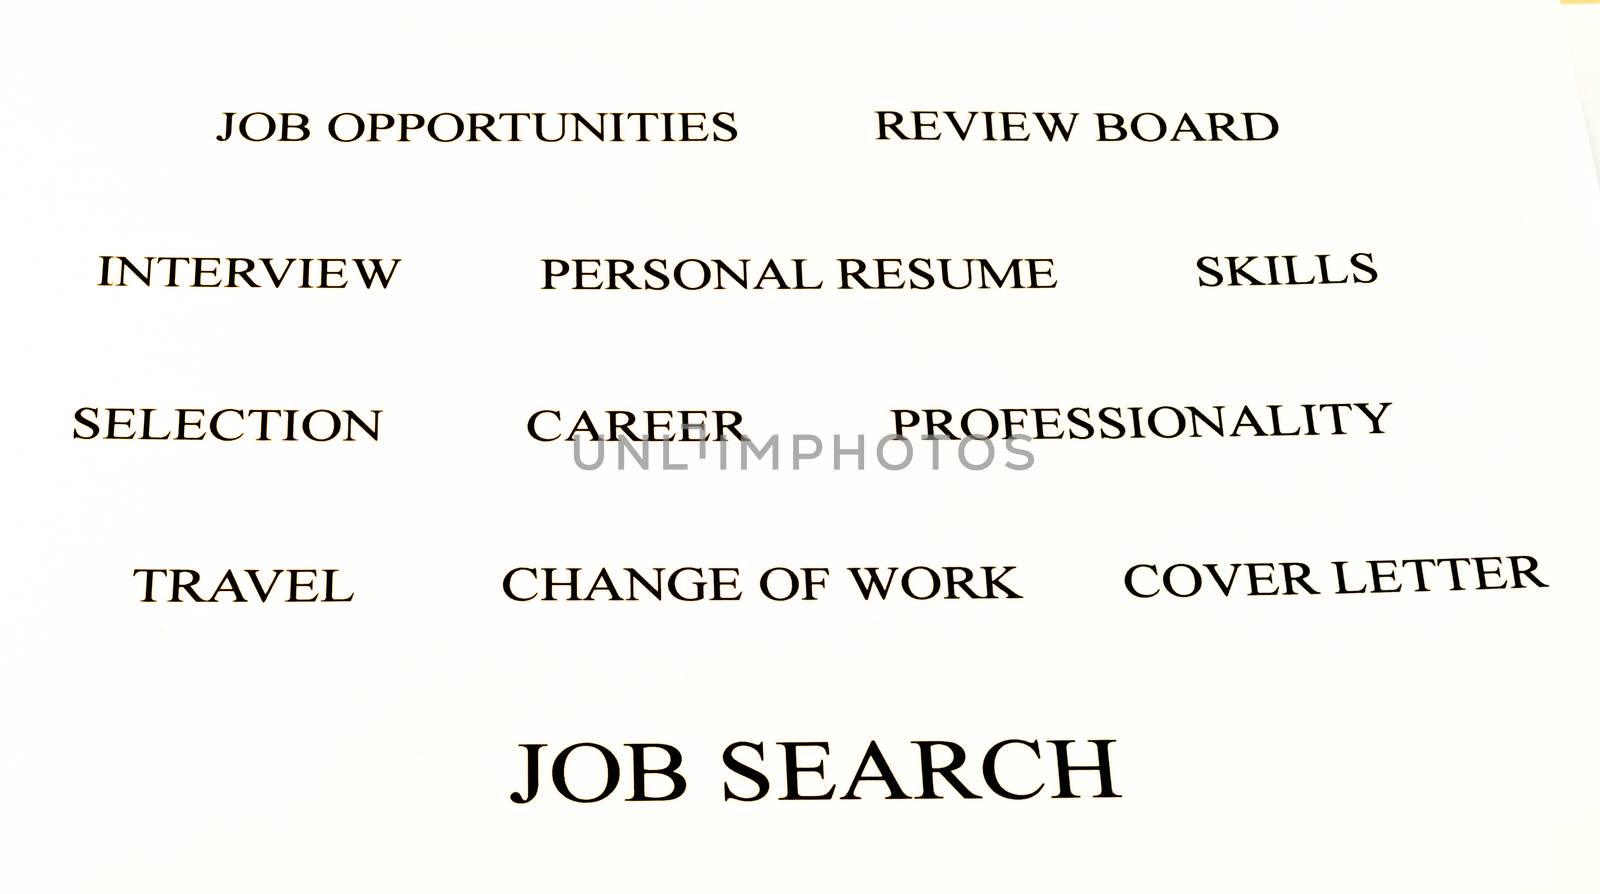 job search by fcarniani